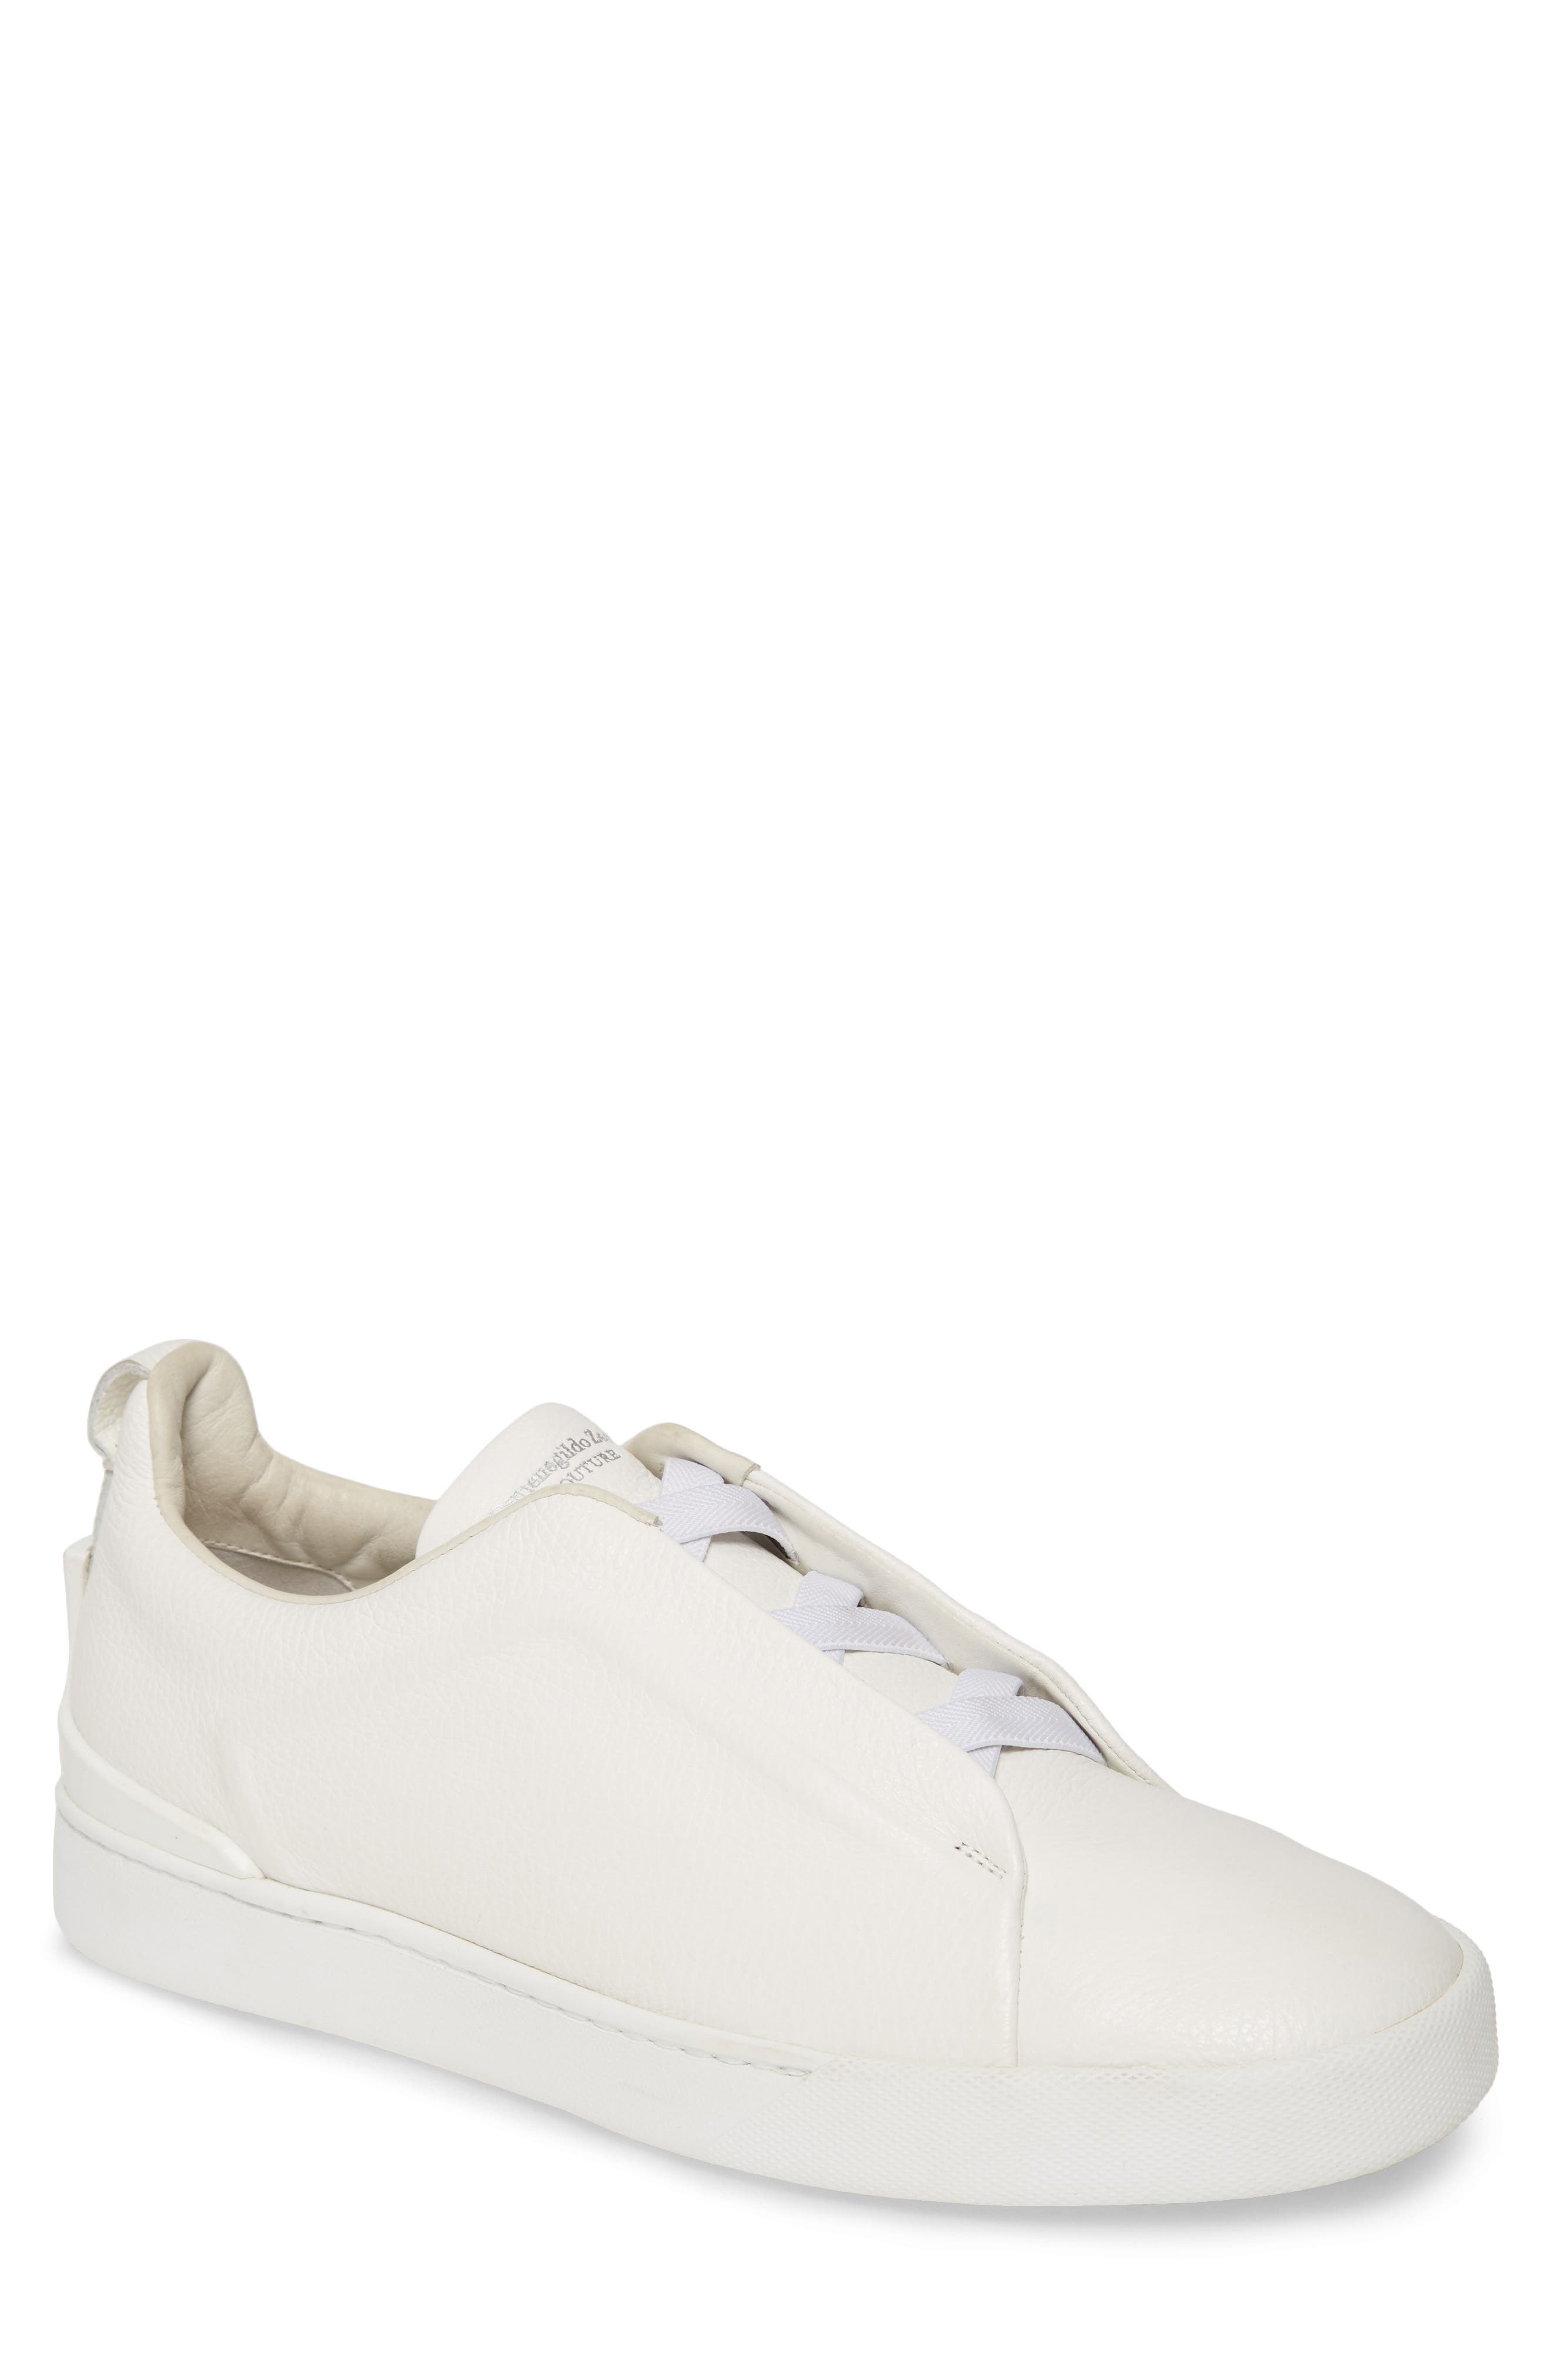 zegna white sneakers